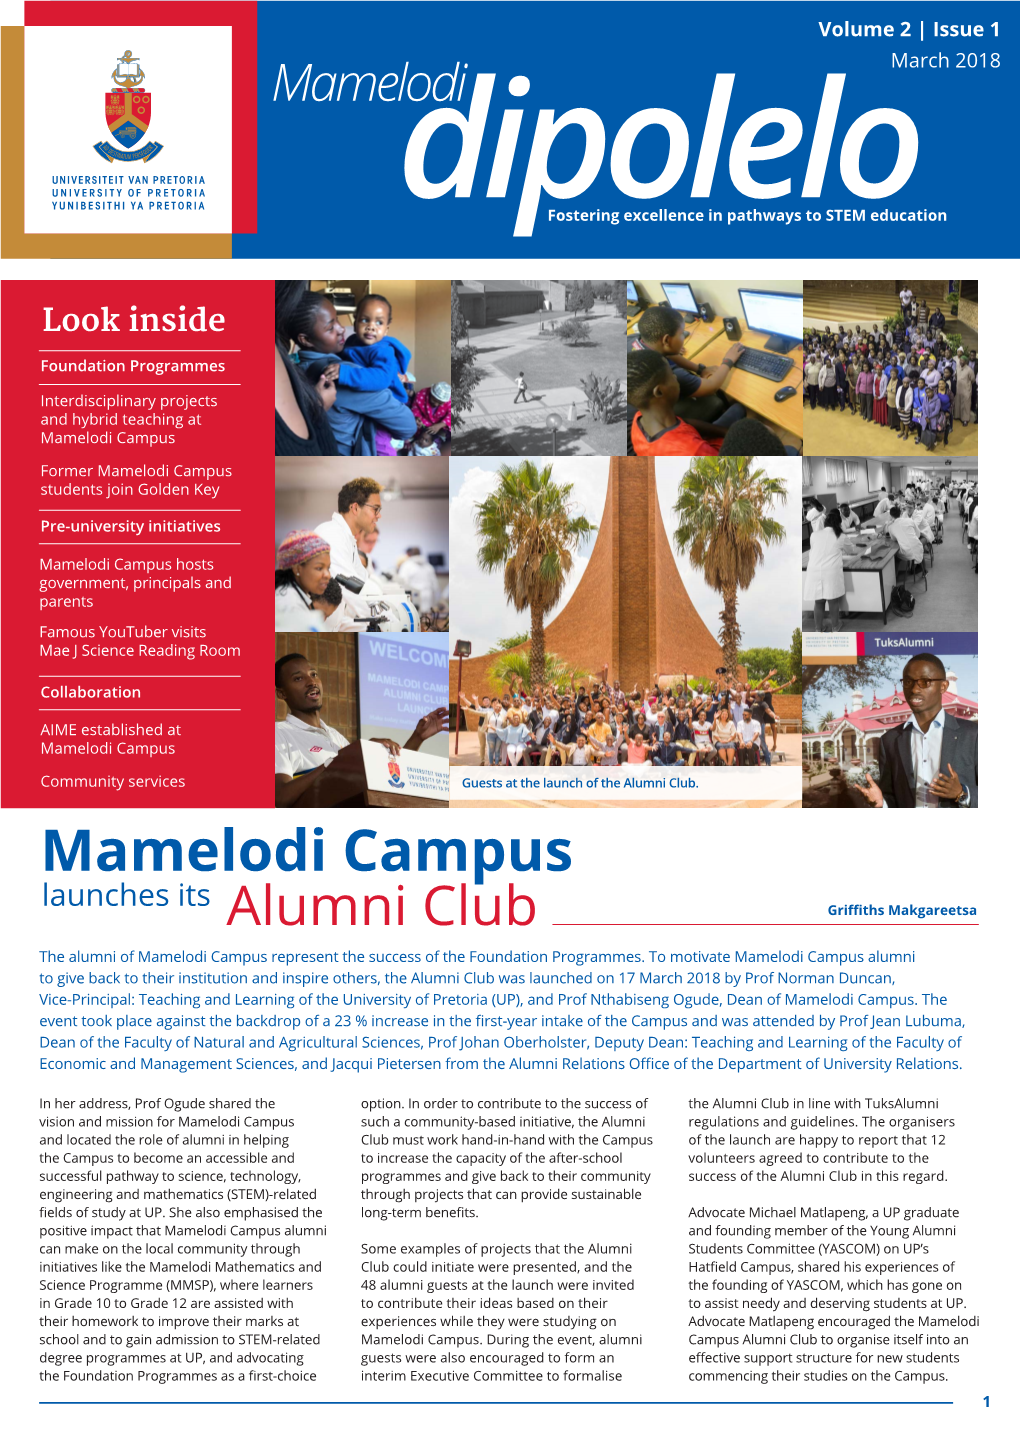 Mamelodi Campus